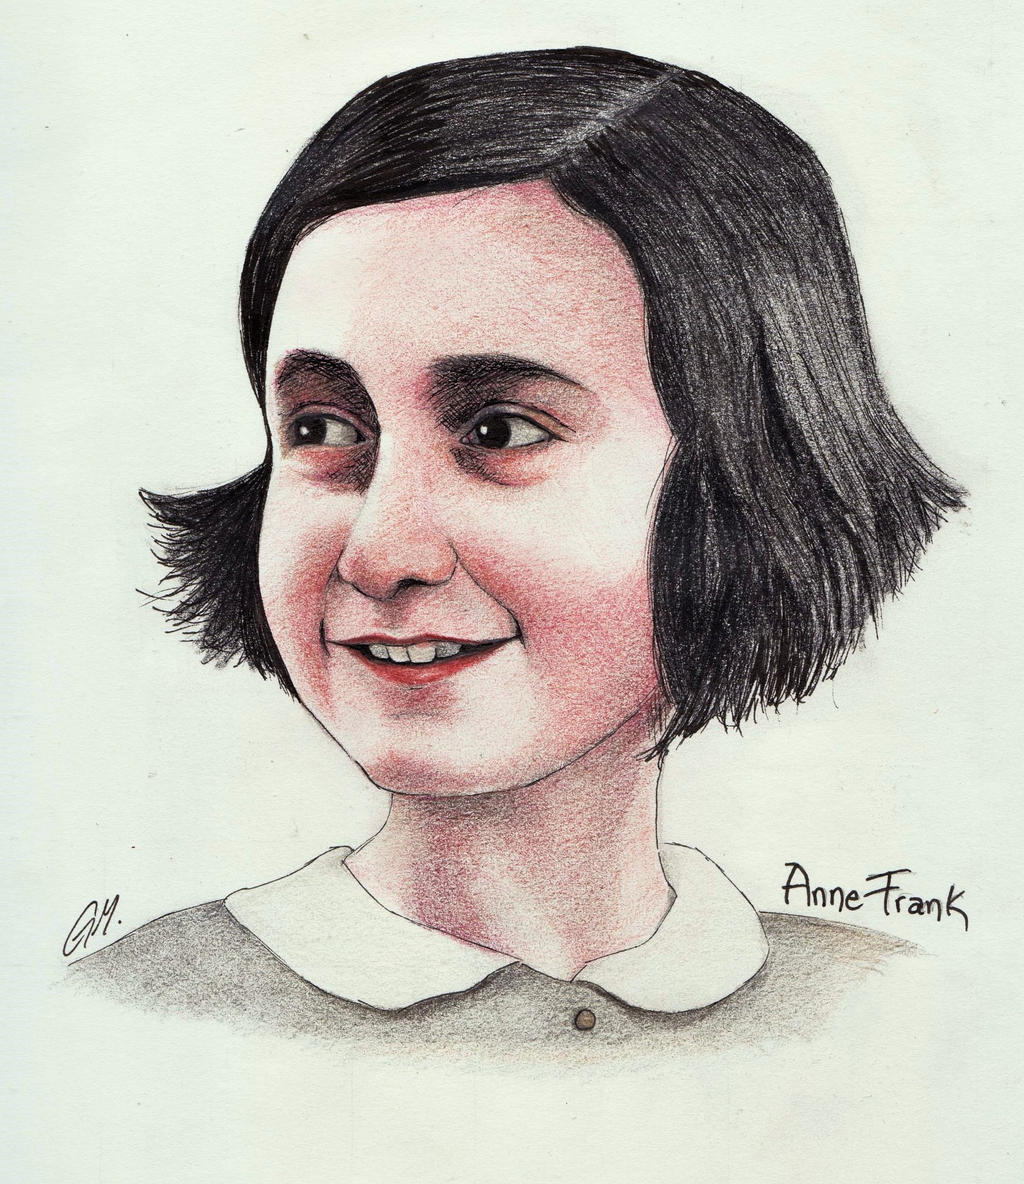 Anne Frank by nicolemr-93 on DeviantArt